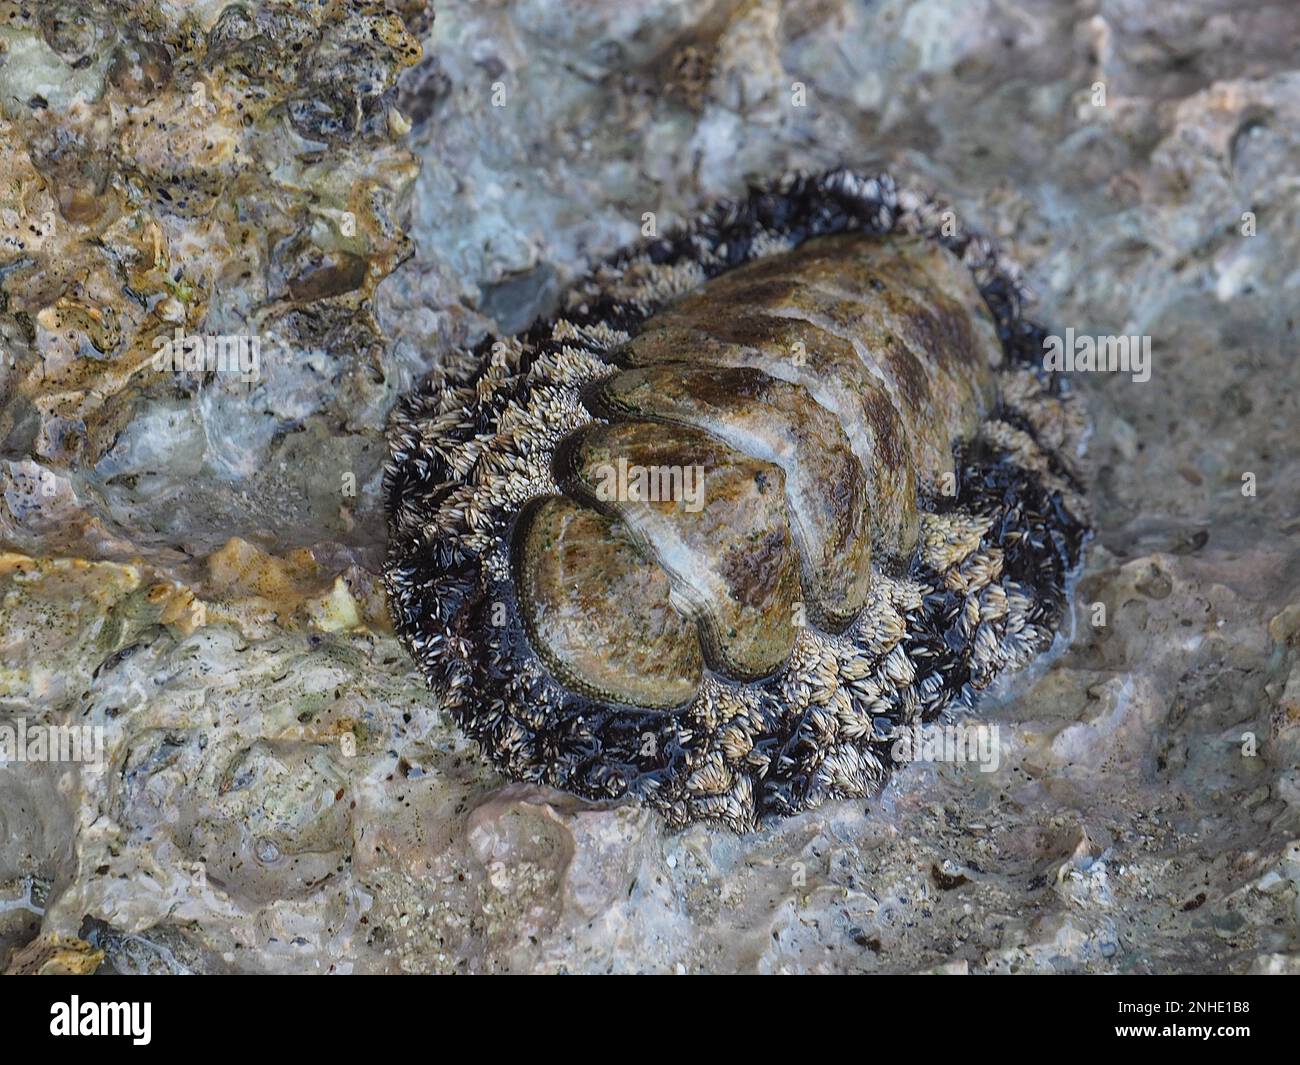 Vaillants beetle snail (Acanthopleura vaillanti), House reef dive site, Mangrove Bay, El Quesir, Red Sea, Egypt Stock Photo